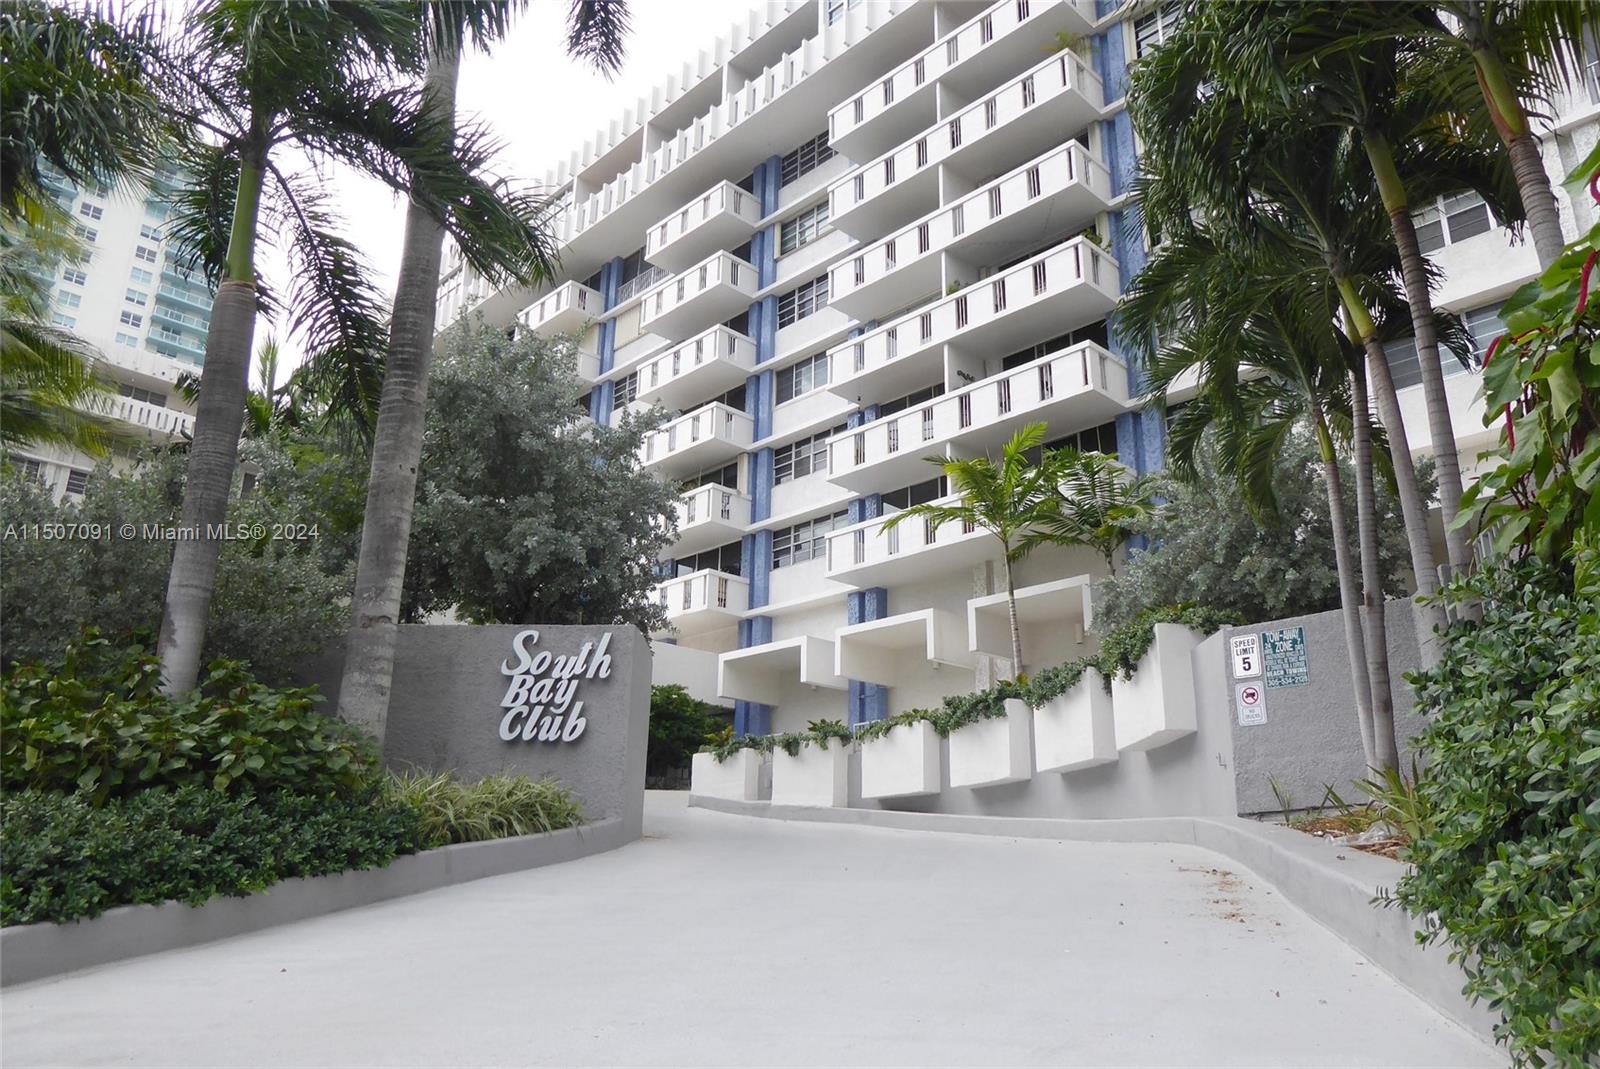 Rental Property at 800 West Ave 237, Miami Beach, Miami-Dade County, Florida - Bathrooms: 1  - $2,100 MO.